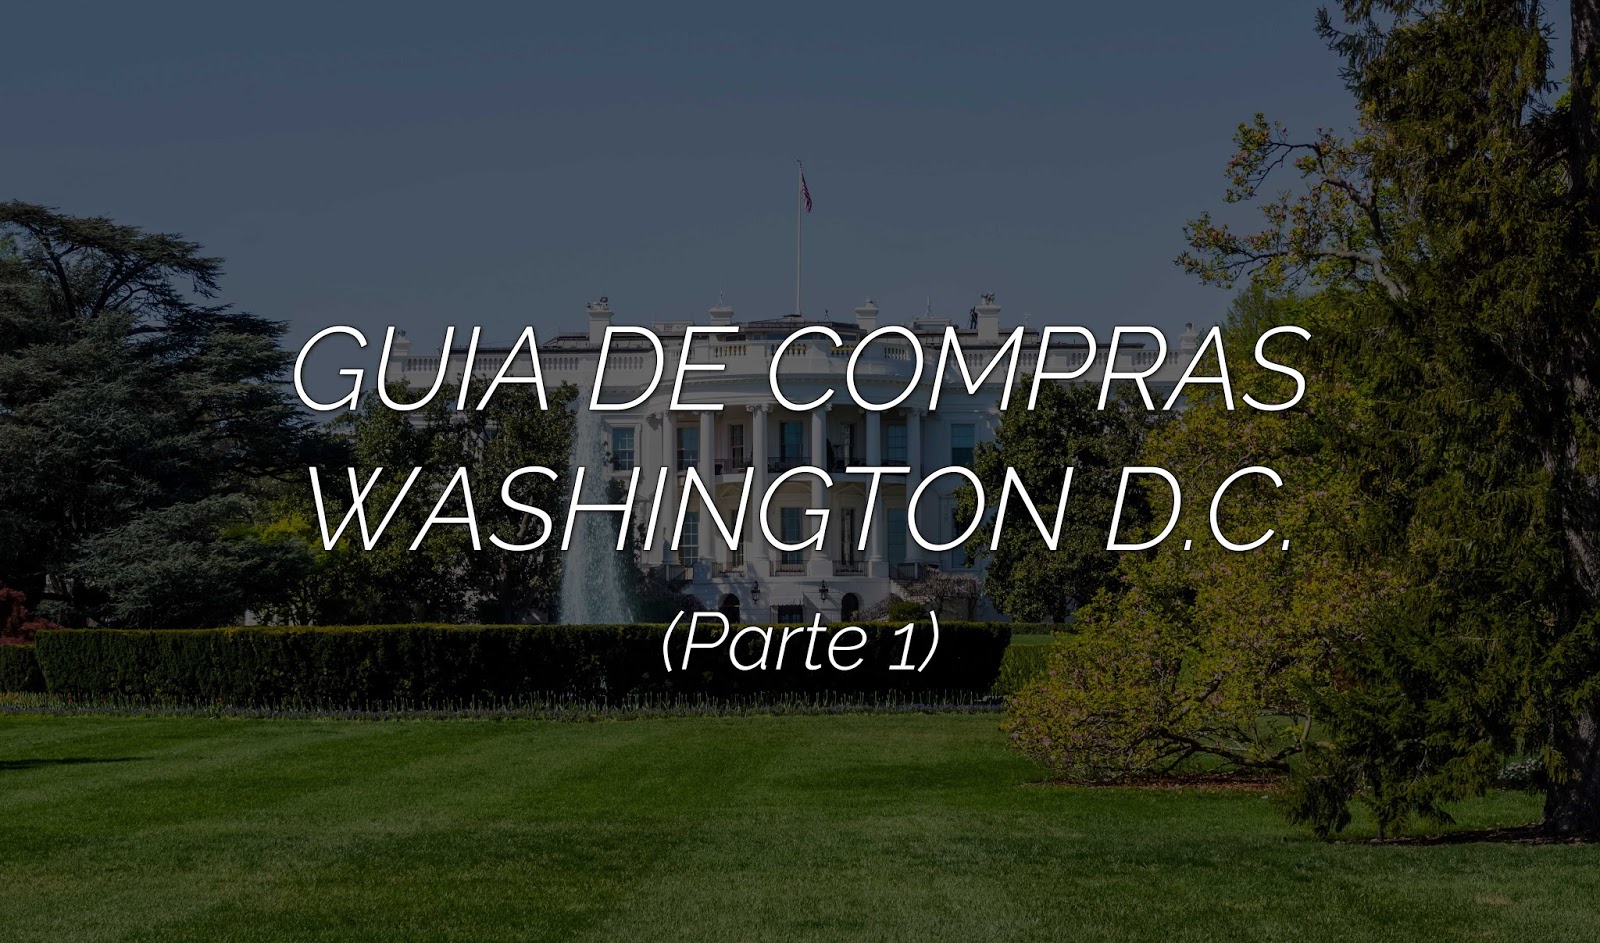 streetwear brasil guia de compras washington dc 00 - Guia de compras: Washington D.C. (Parte 1)